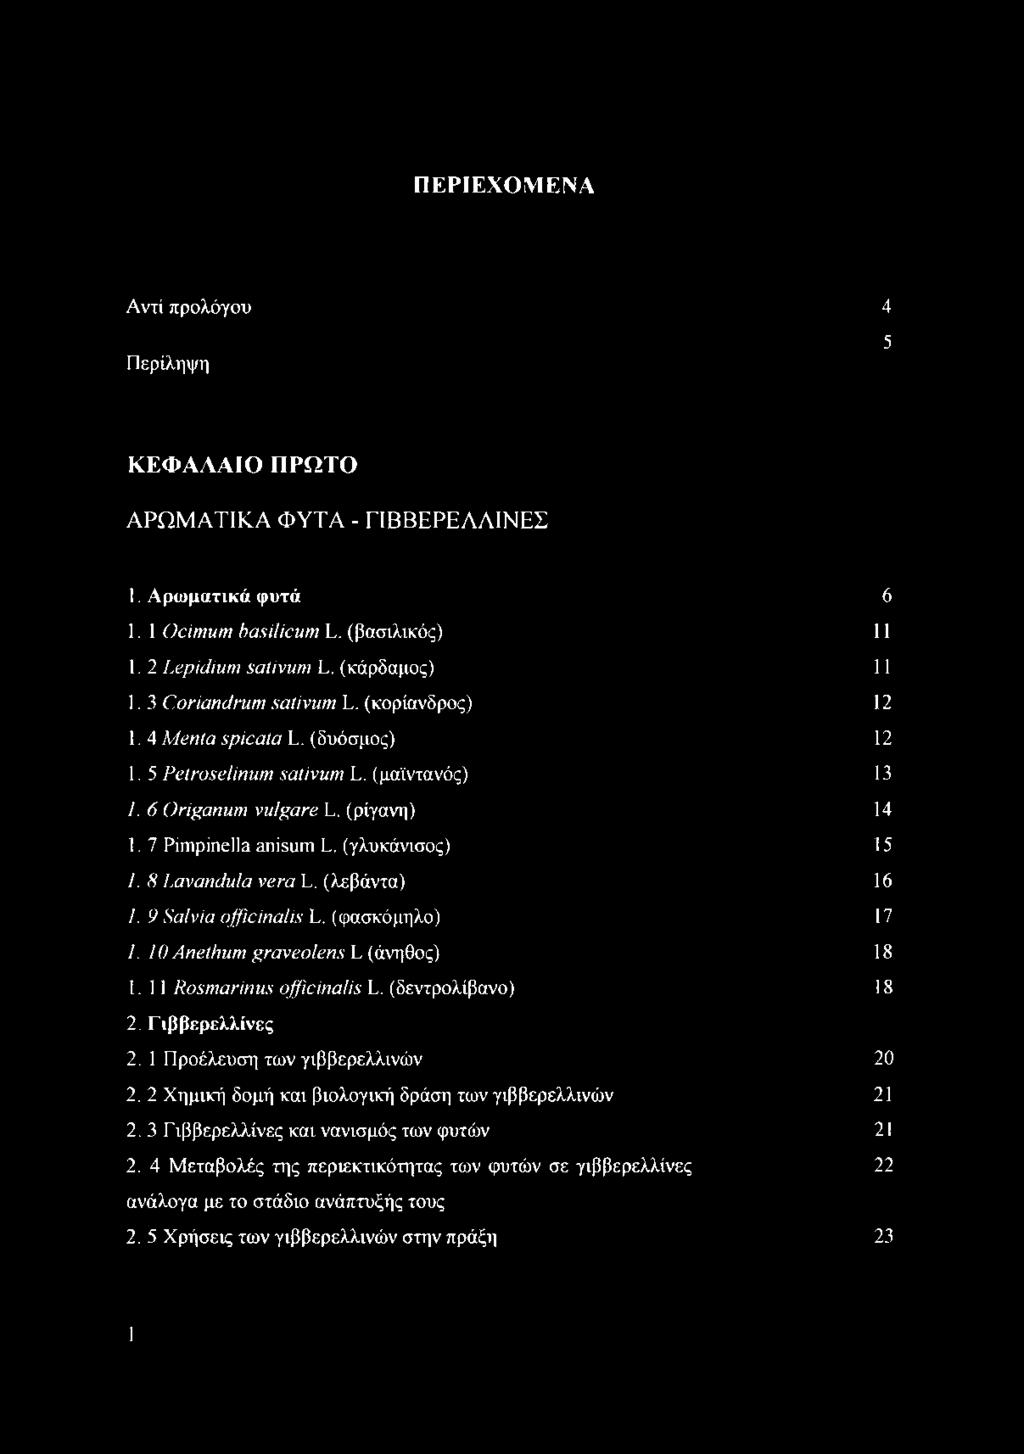 8 Lavandula vera L. (λεβάντα) 16 I. 9 Salvia officinalis L. (φασκόμηλο) 17 1. 10 Anethum graveolens L (άνηθος) 18 1.11 Rosmarinus officinalis L. (δεντρολίβανο) 18 2. Γιββερελλίνες 2.